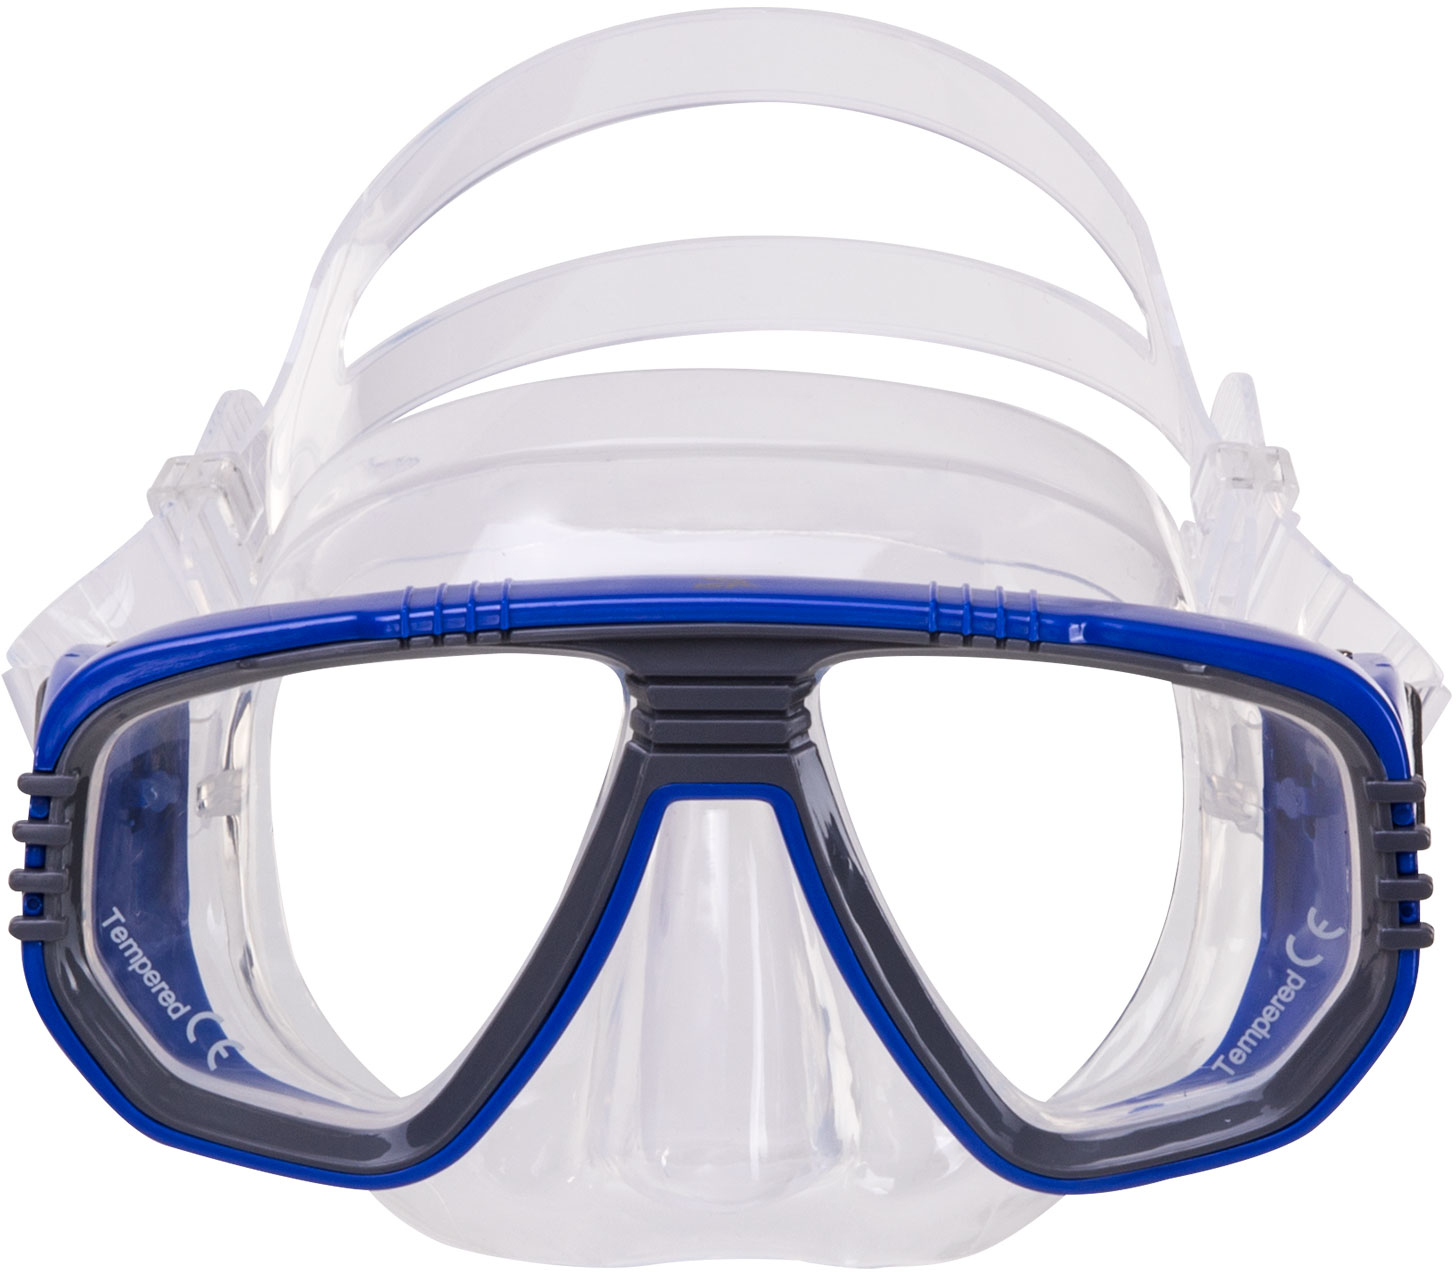 IST Corona 2 Window Scuba Diving Mask - Blue